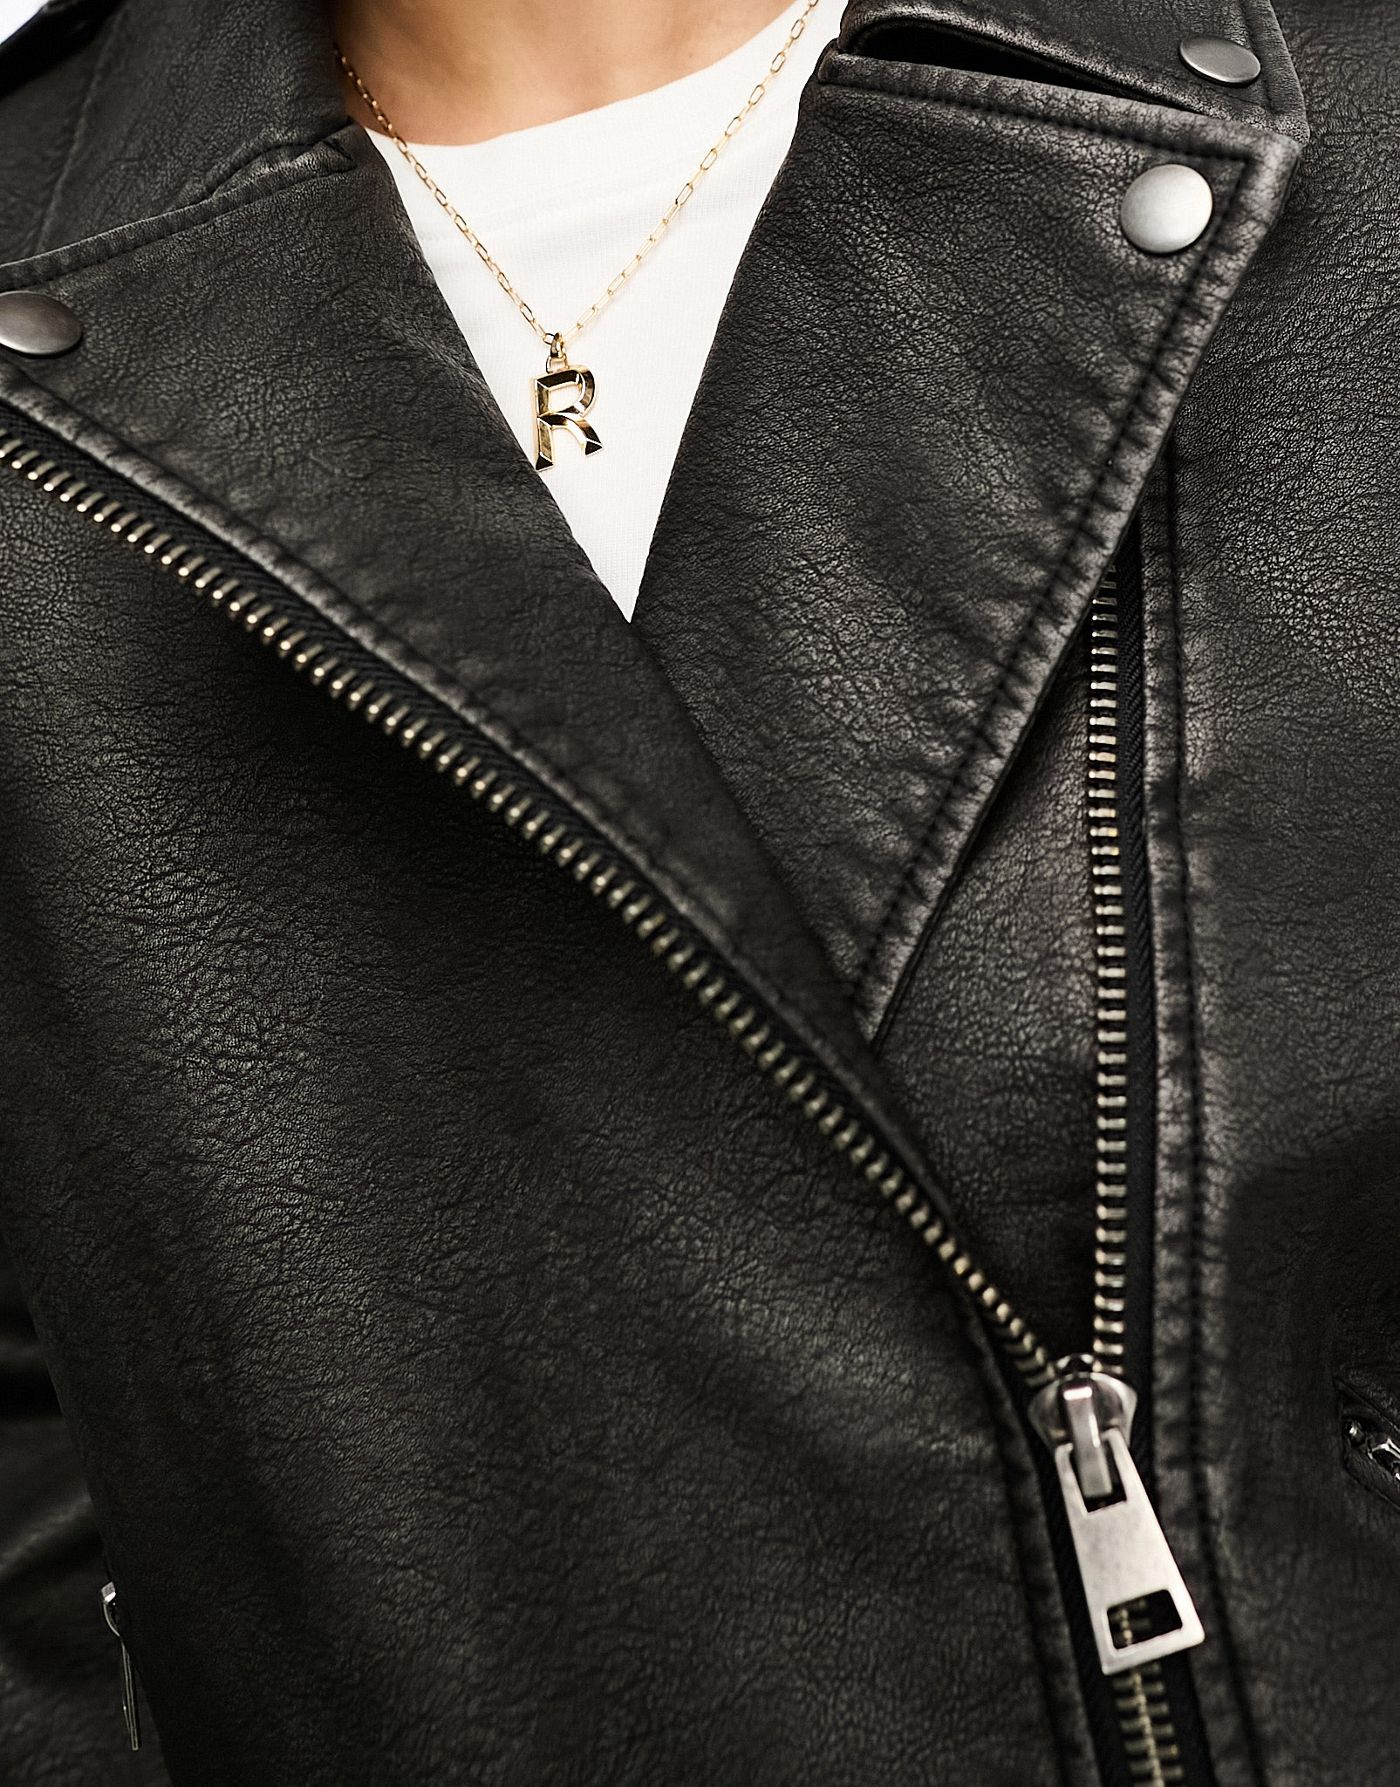 Miss Selfridge washed faux leather oversized biker jacket in black wash